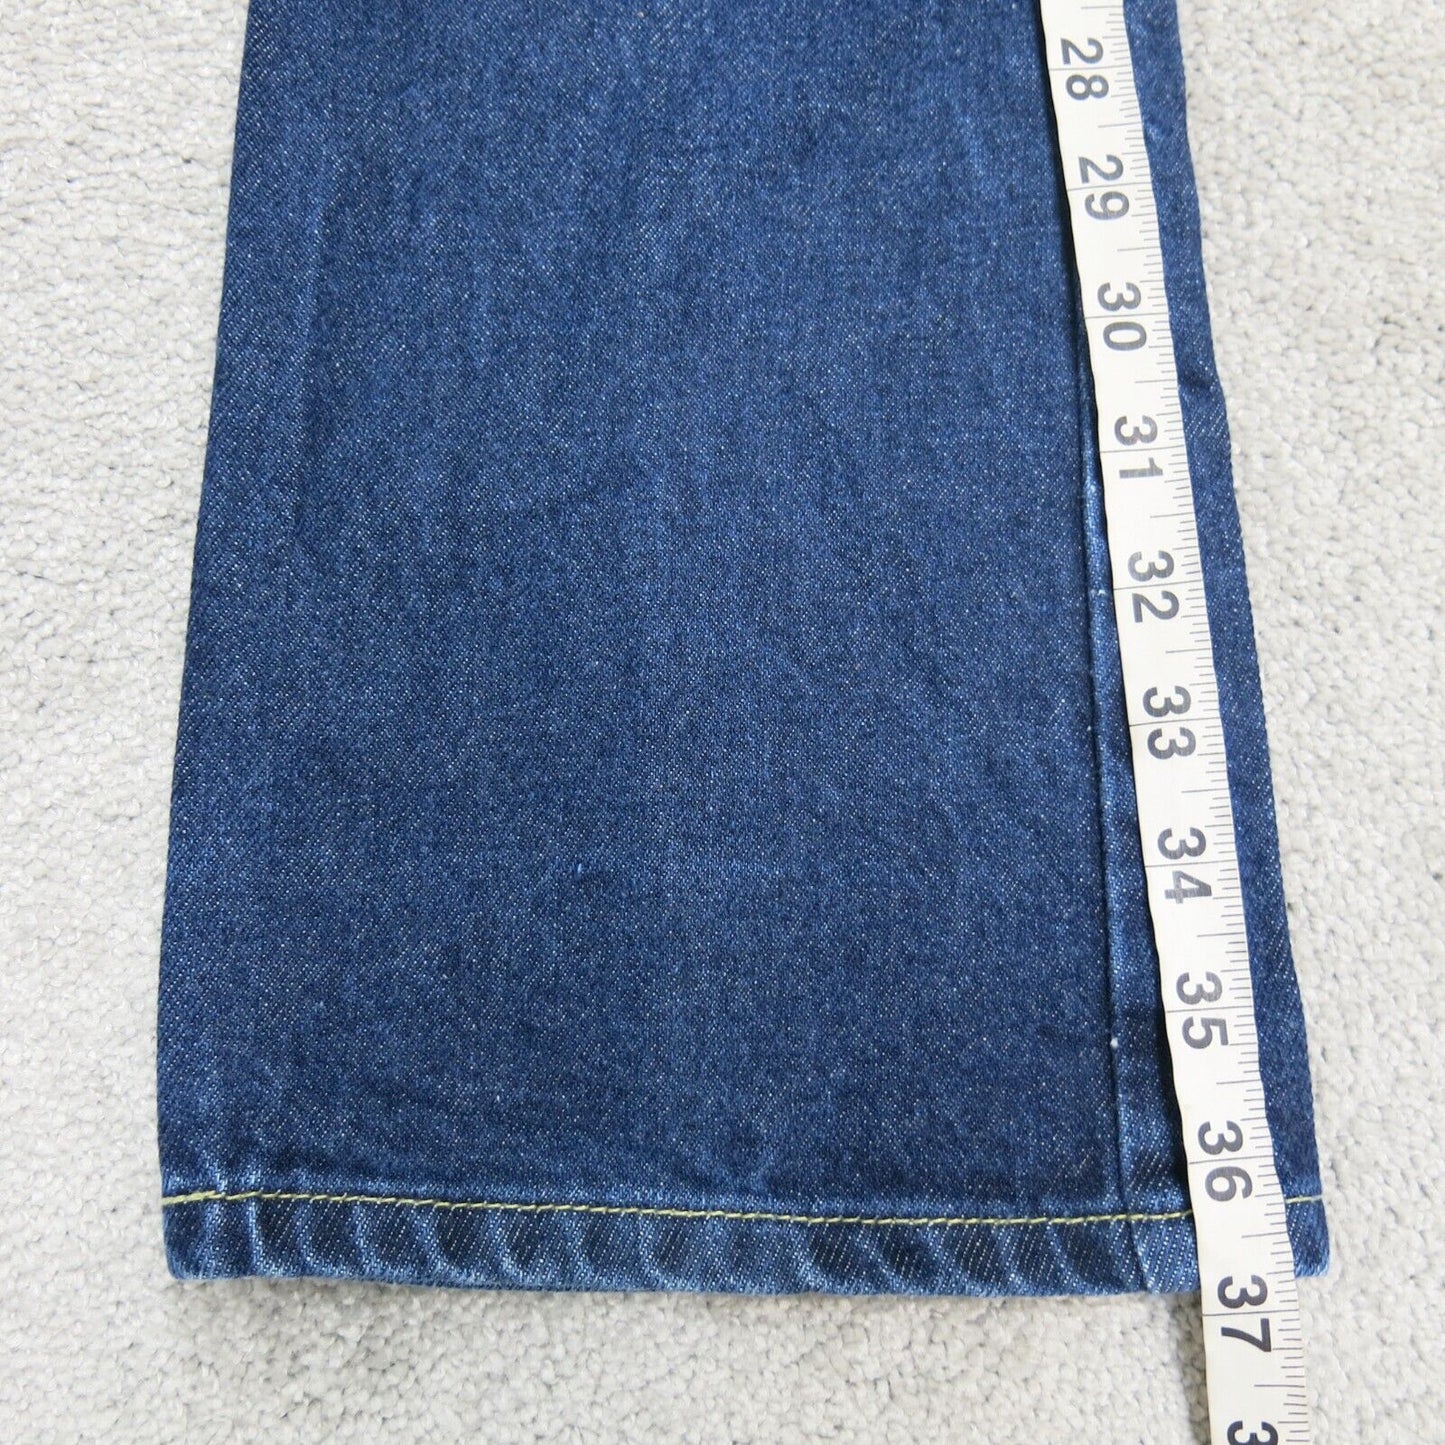 Tommy Hilfiger Womens Straight Leg Jeans Denim Stretch Mid Rise Pocket Blue SZ 5